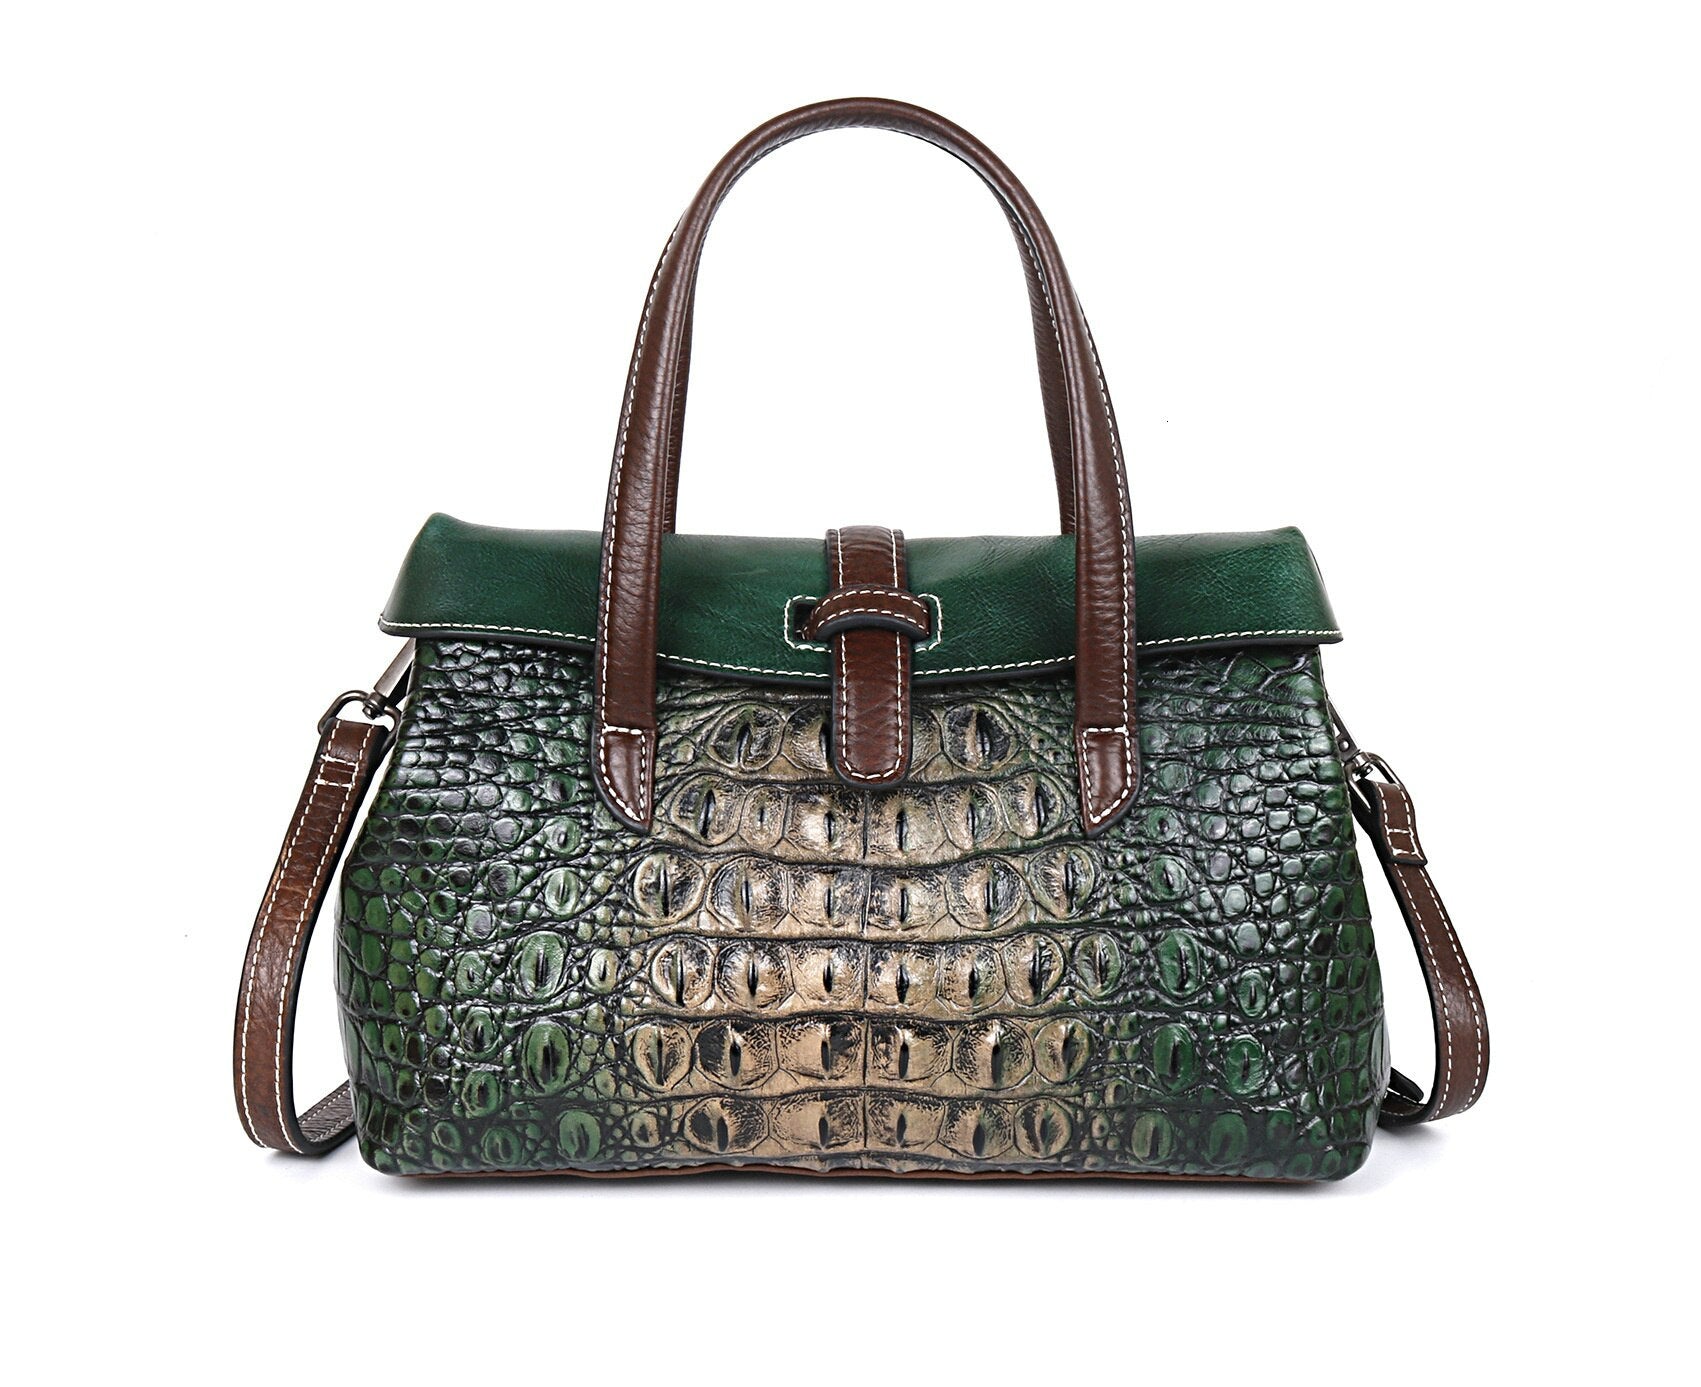 Borse in Pelle Genuine Leather Crossbody Purse Bag Made in Italy | eBay